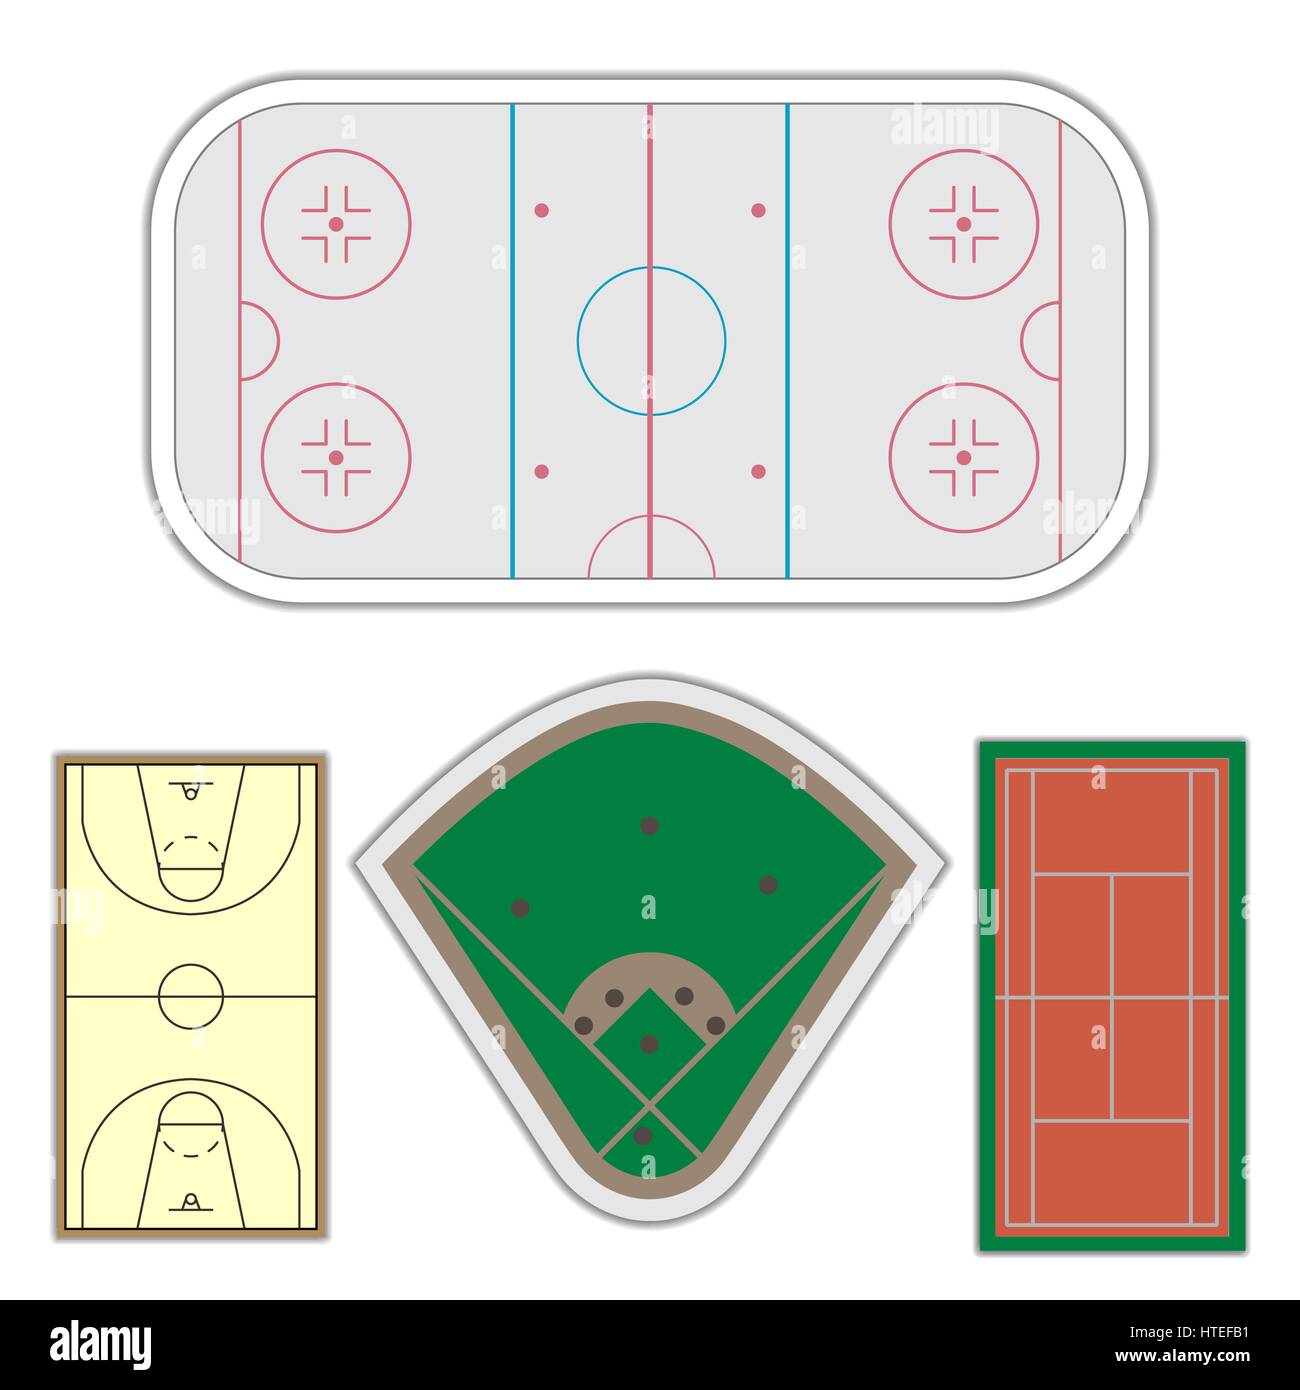 90 Hockey Pitch Illustrations RoyaltyFree Vector Graphics  Clip Art   iStock  Field hockey pitch Ice hockey pitch